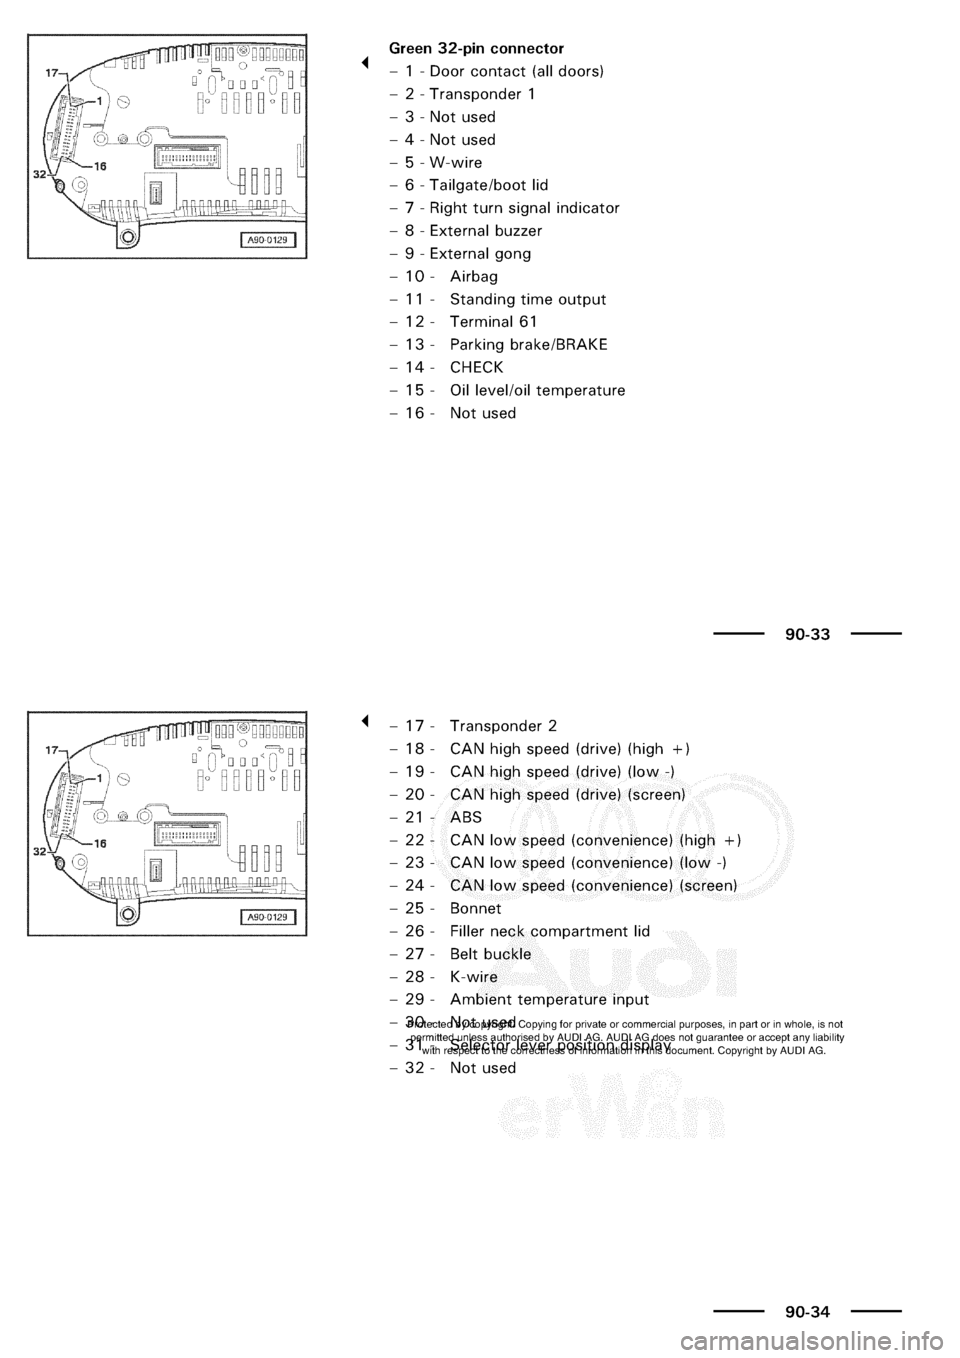 AUDI A3 1999 8L / 1.G Electrical System Repair Manual 